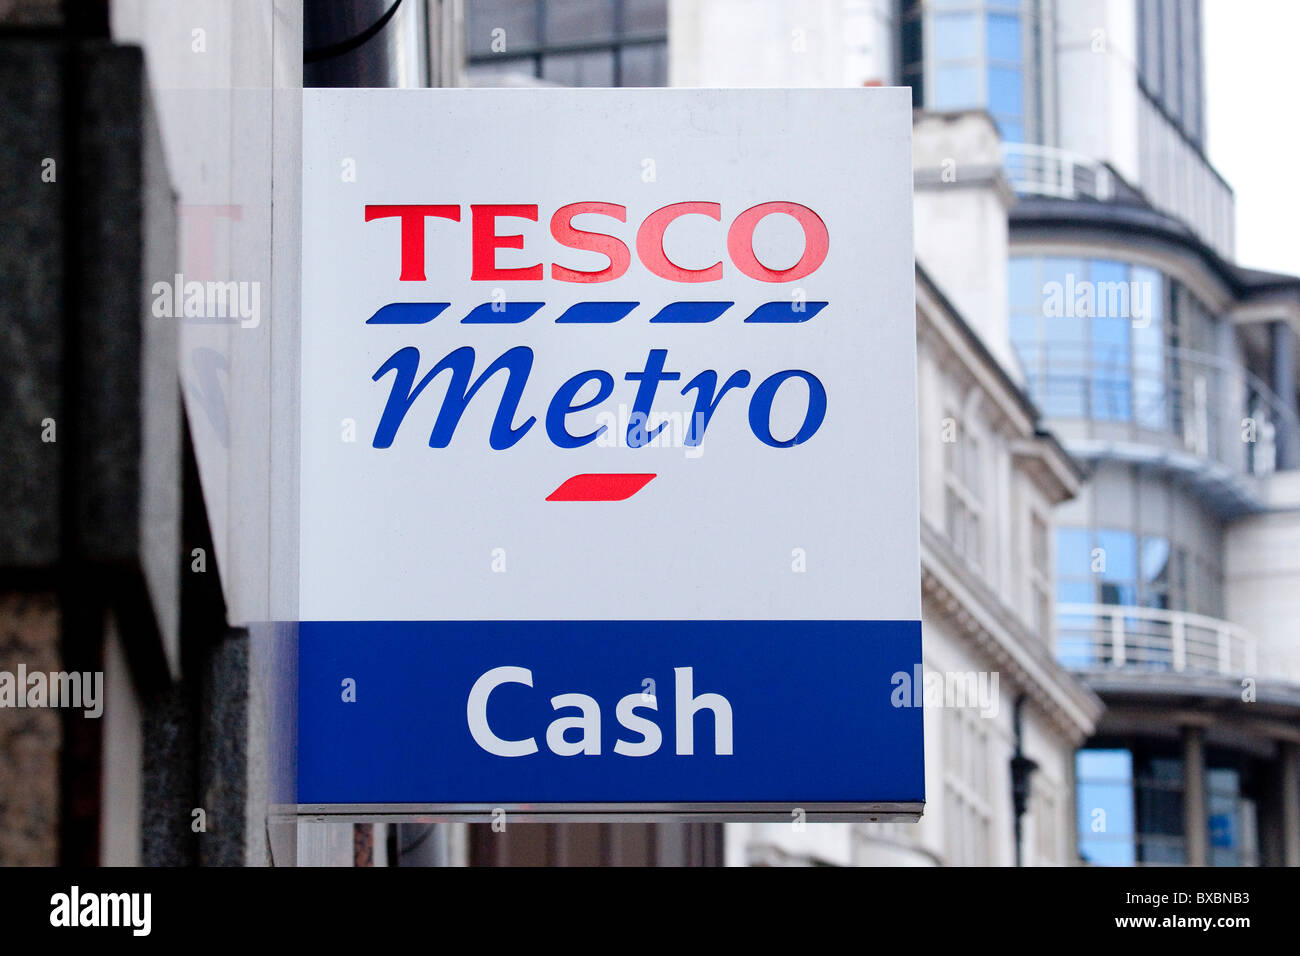 Logo on a store of the supermarket chain Tesco, Tesco Express, London, England, United Kingdom, Europe Stock Photo